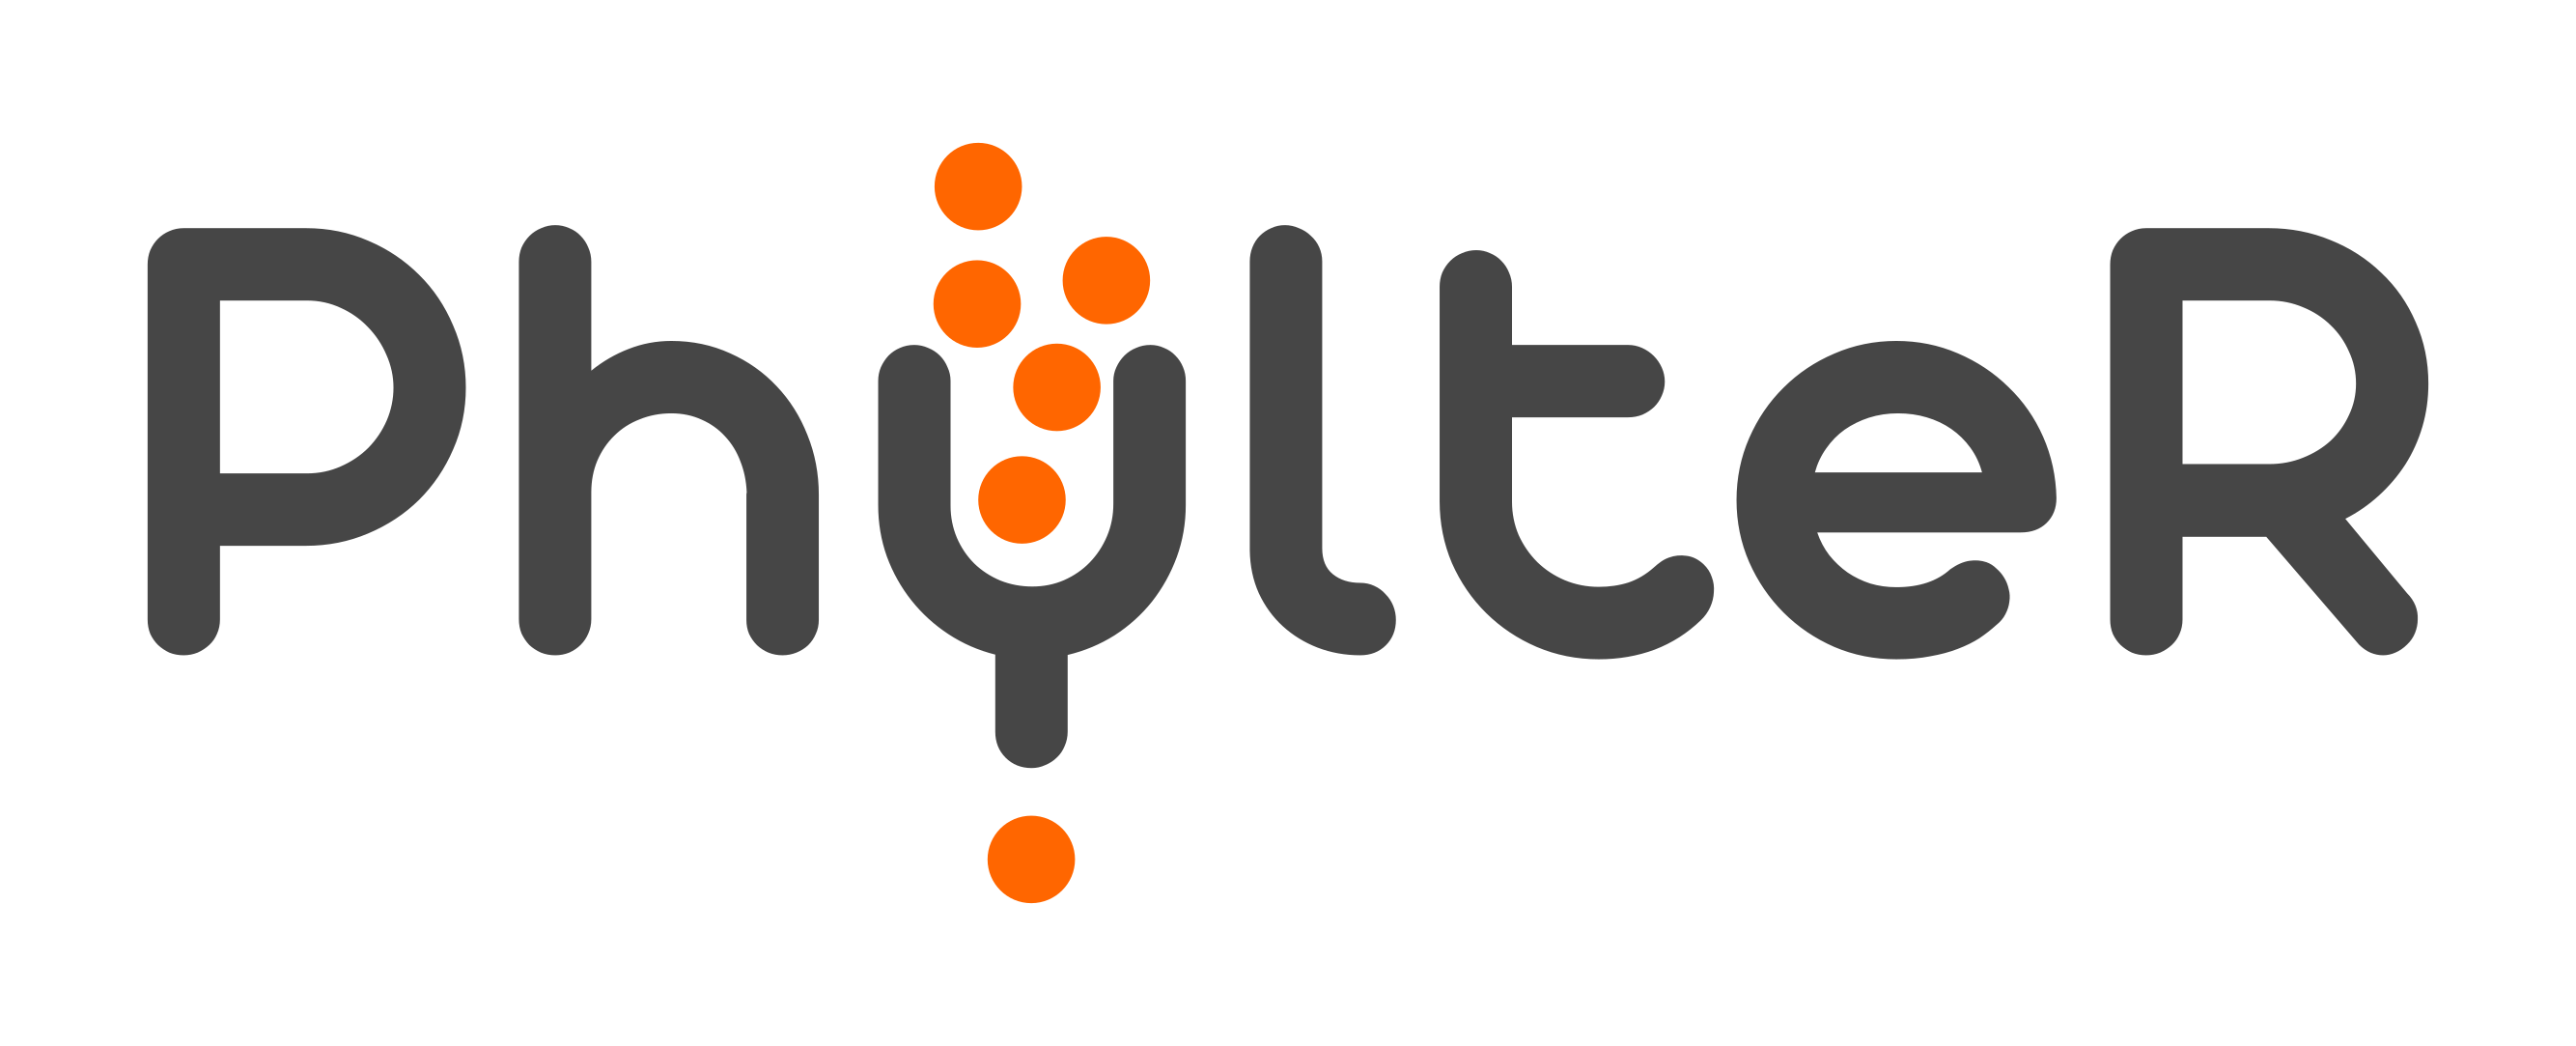 PhylteR_logo.png